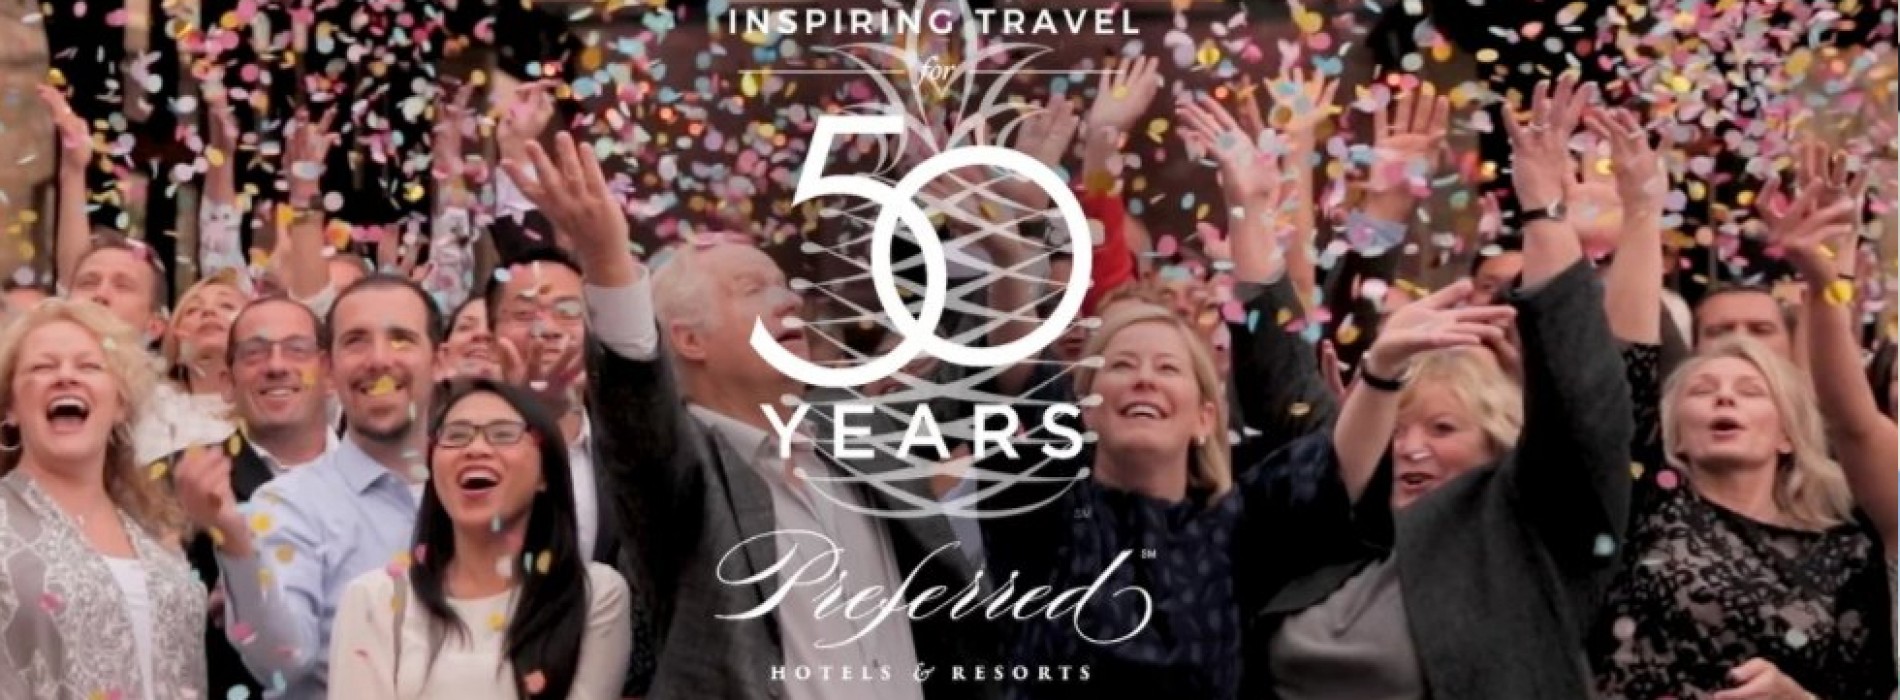 Preferred Hotels & Resorts celebrates 50 years of inspiring travel